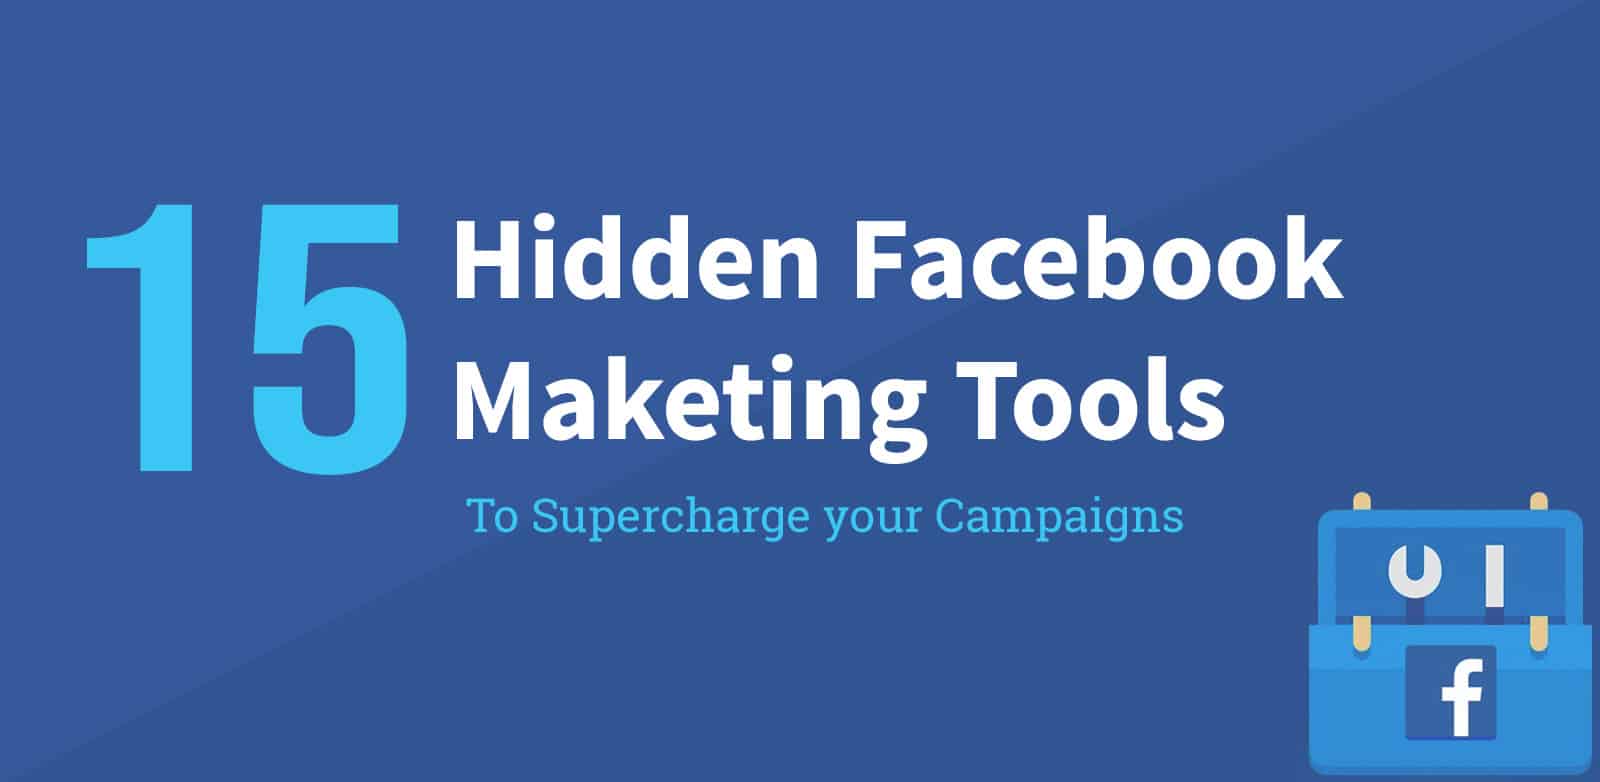 Hidden Facebook Marketing Tools